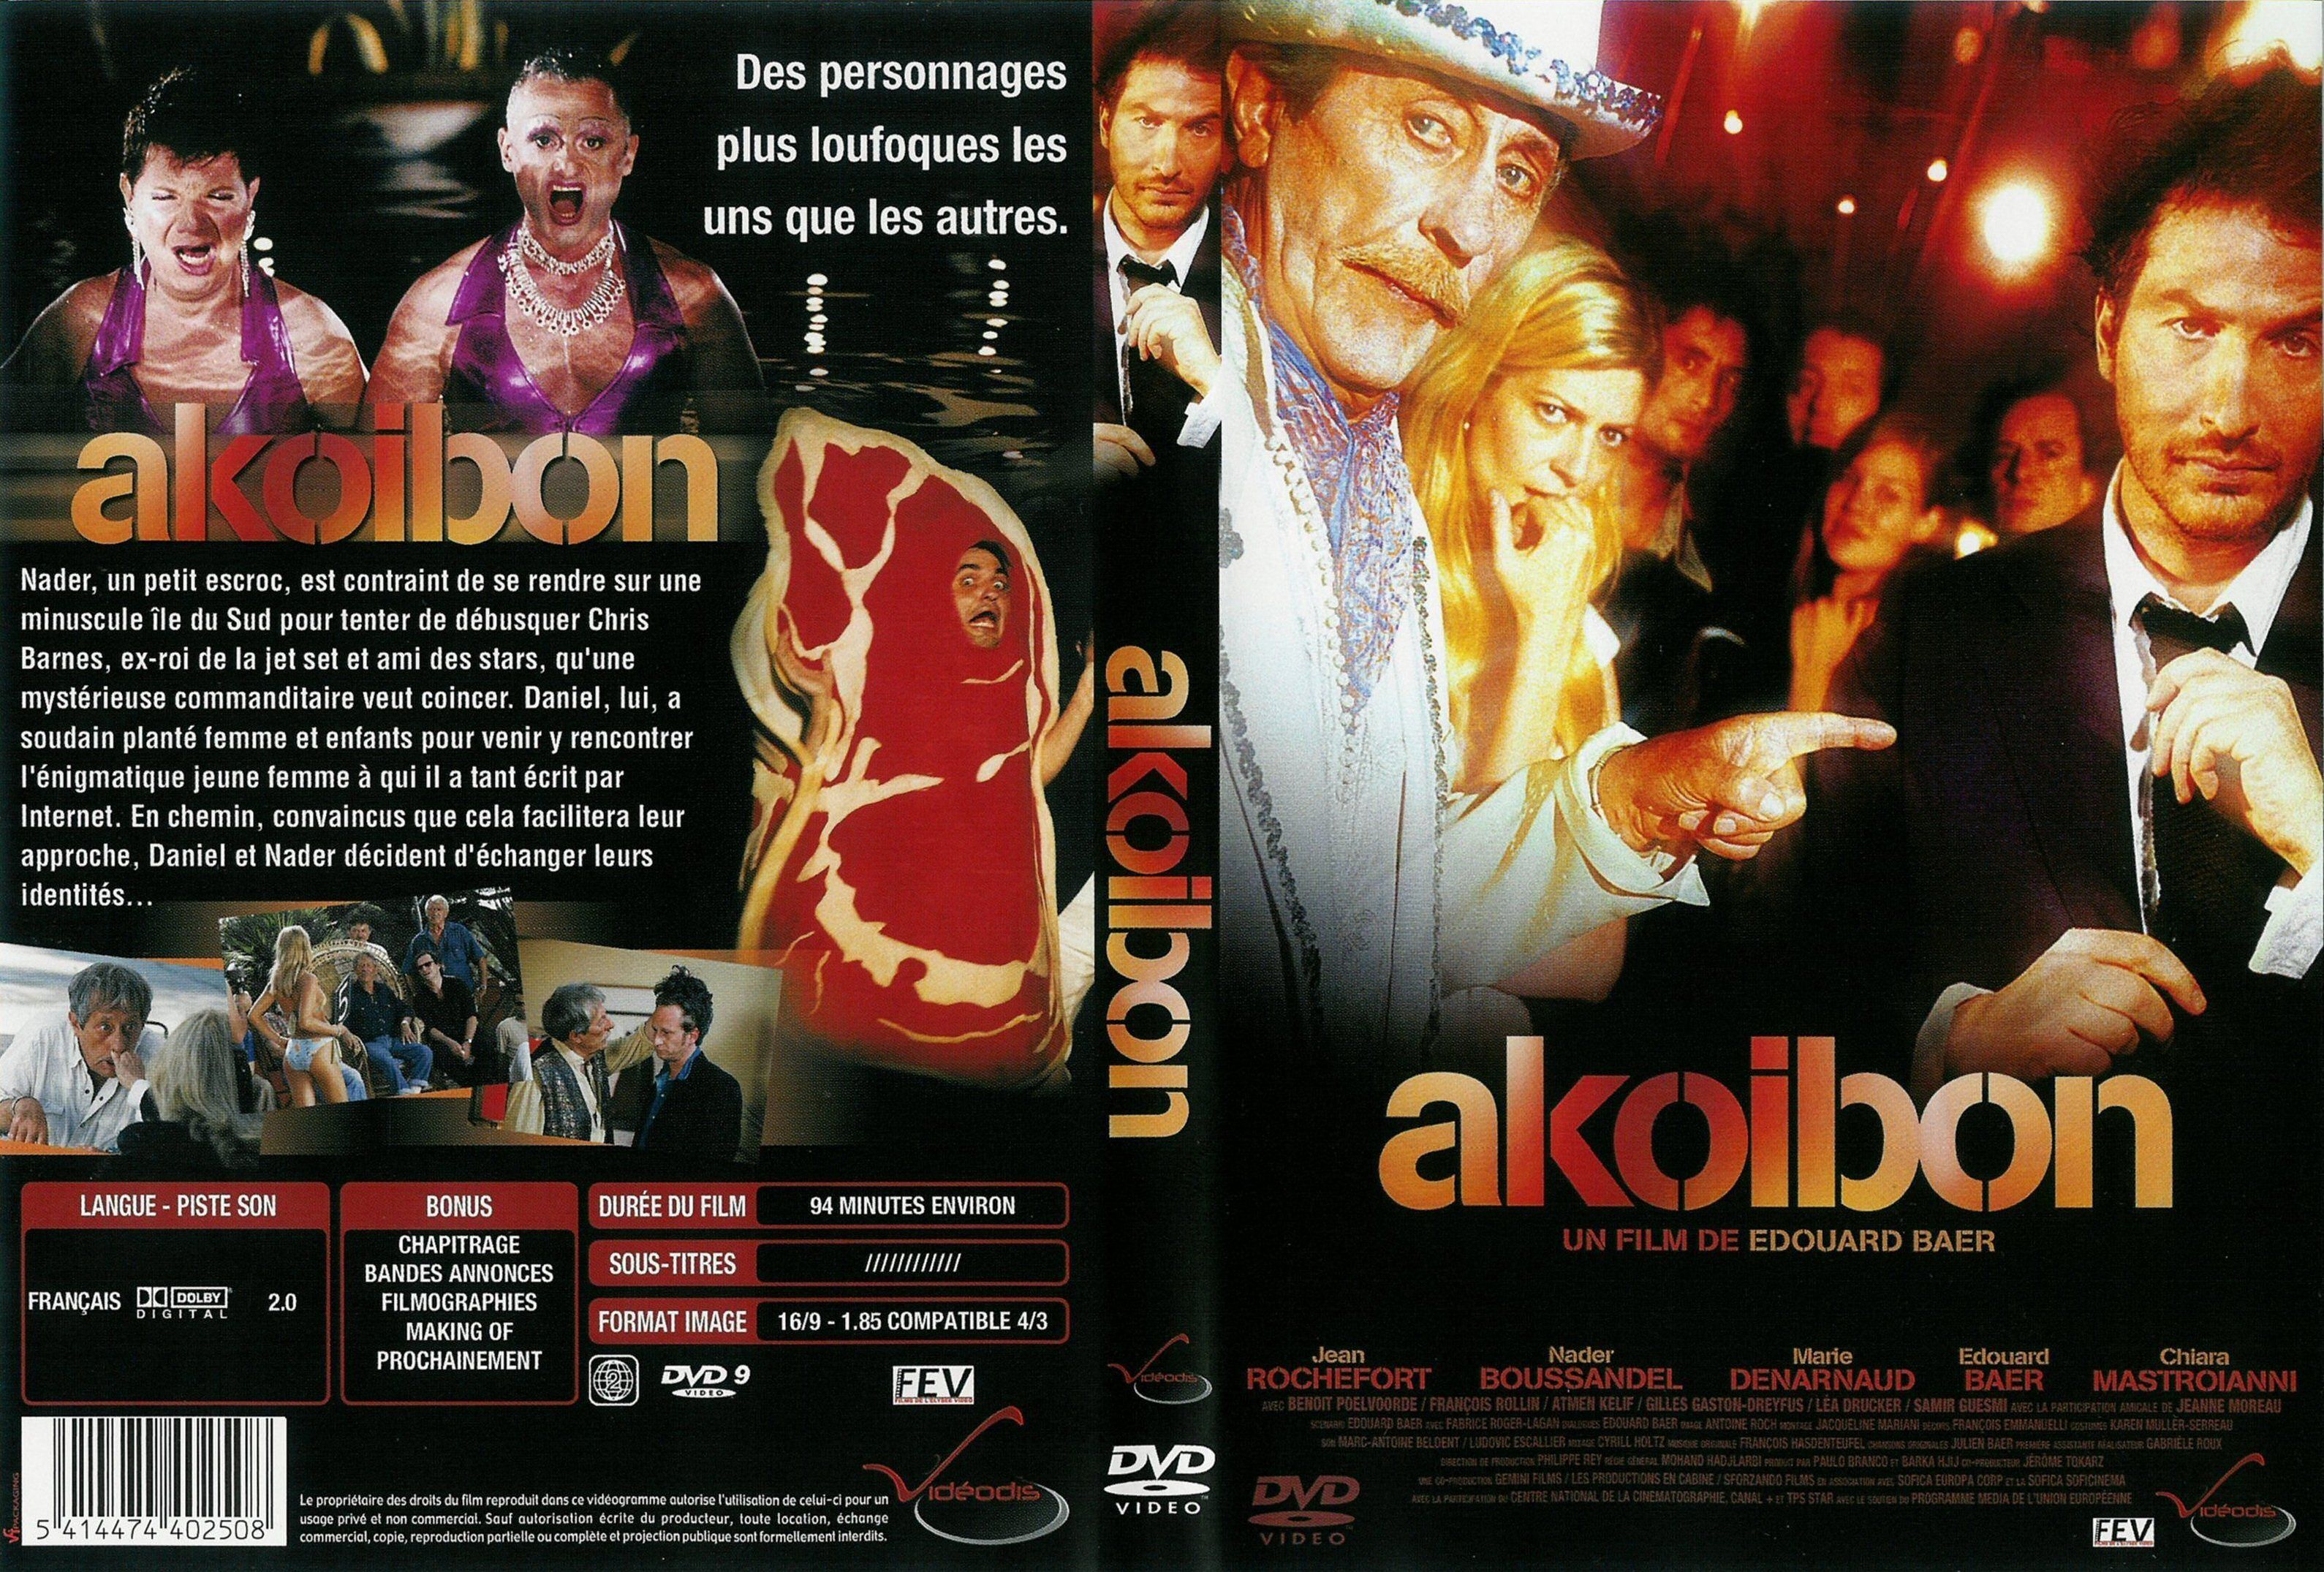 Jaquette DVD Akoibon v2